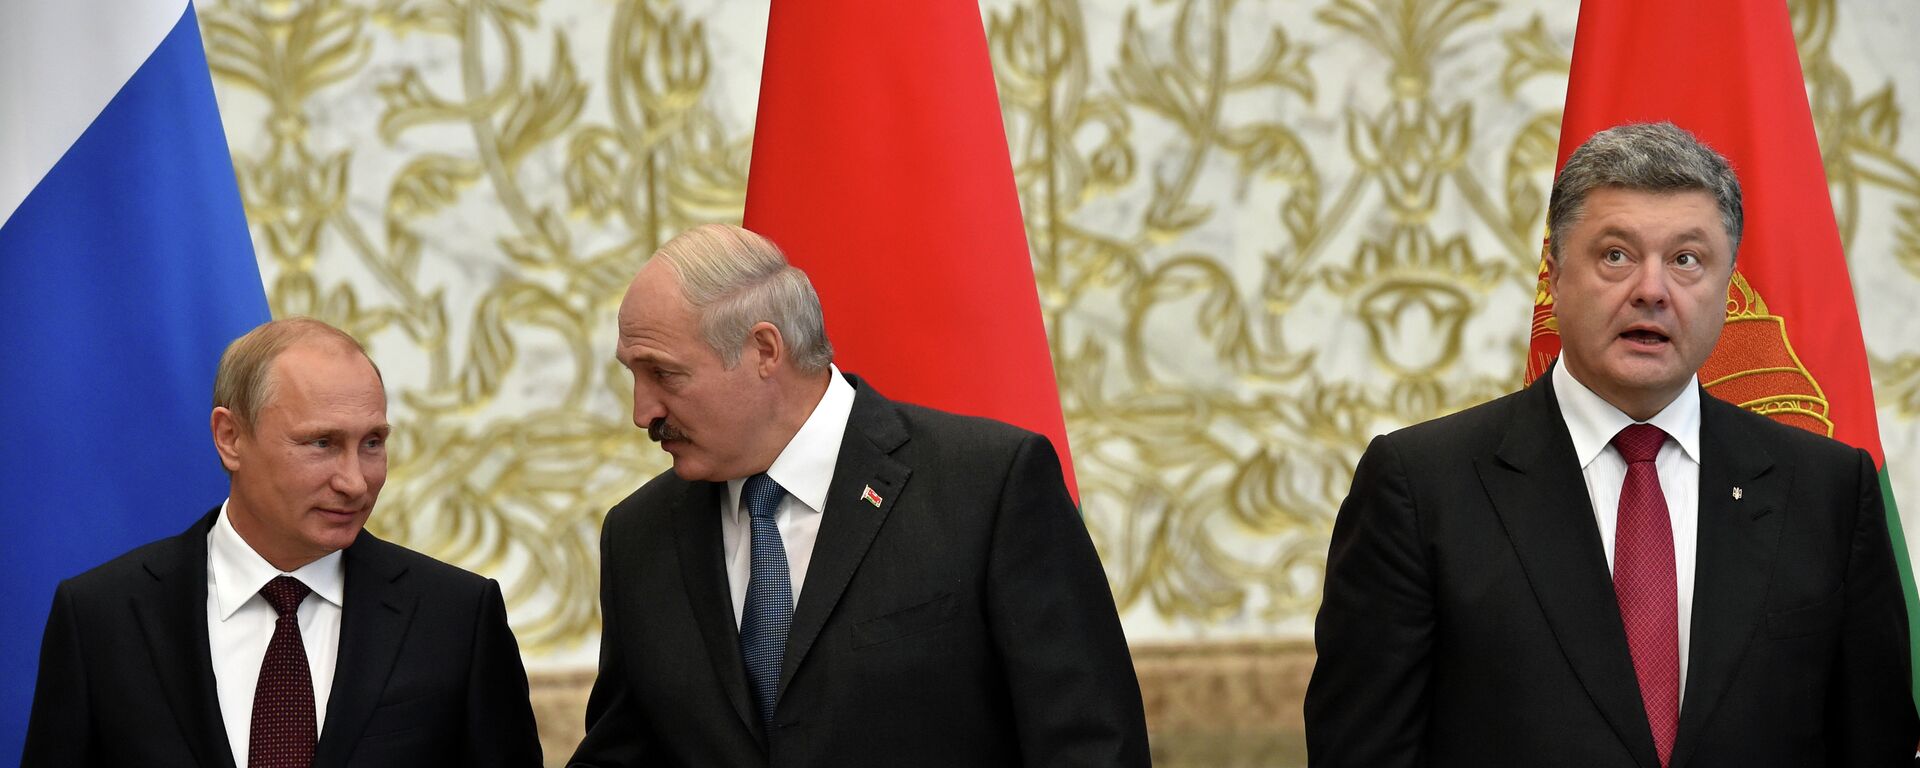 Belarus' President Alexander Lukashenko (C) gestures next to Russia's President Vladimir Putin (L) and Ukraine's President Petro Poroshenko as they meet in the Belarussian capital Minsk  - Sputnik International, 1920, 31.01.2023